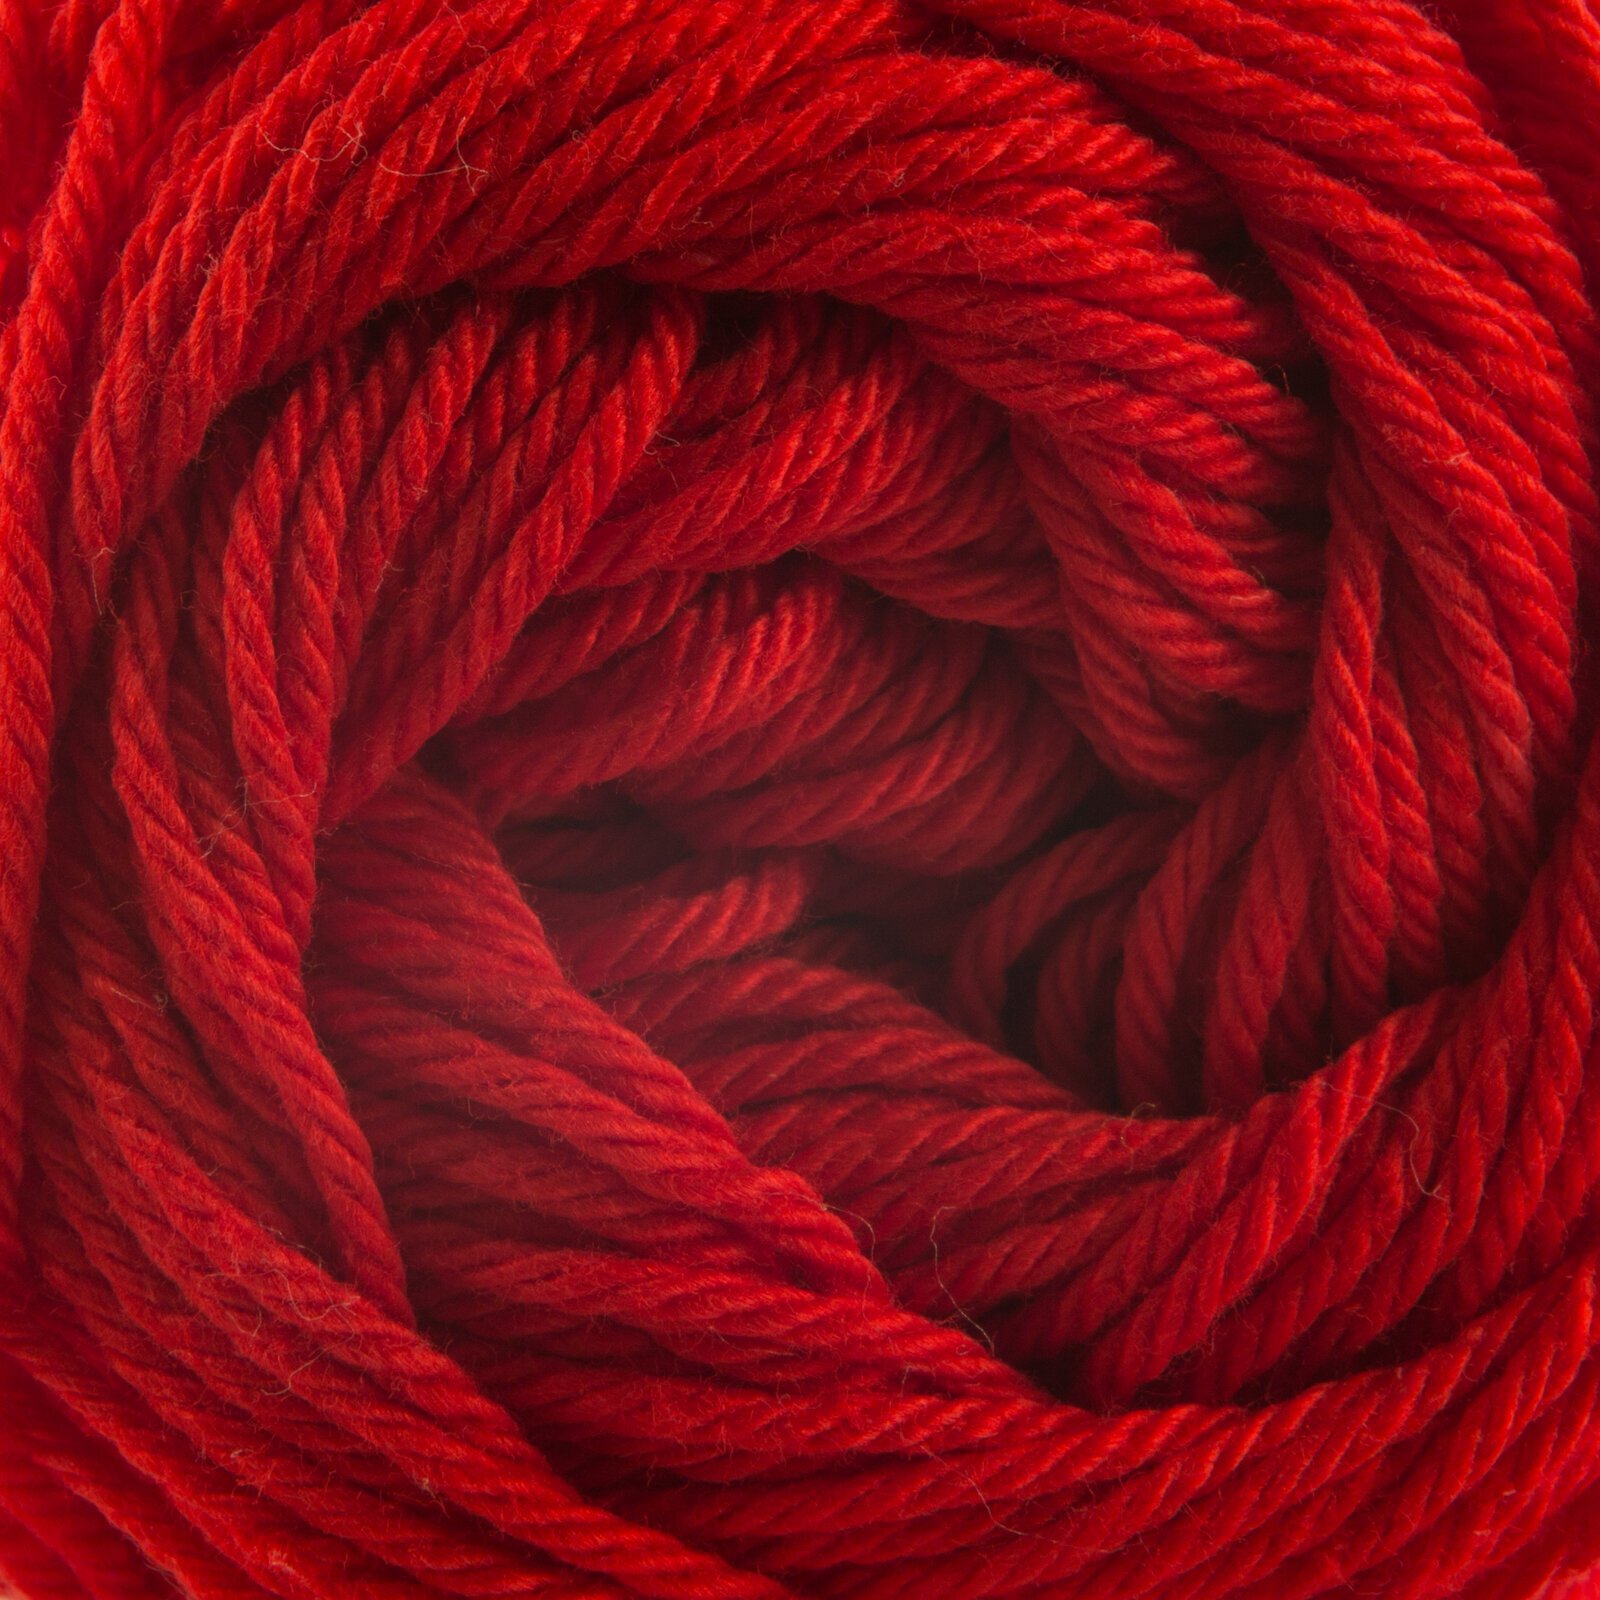 Knitting Yarn Nitarna Ceska Trebova Silva 3294 Red Knitting Yarn